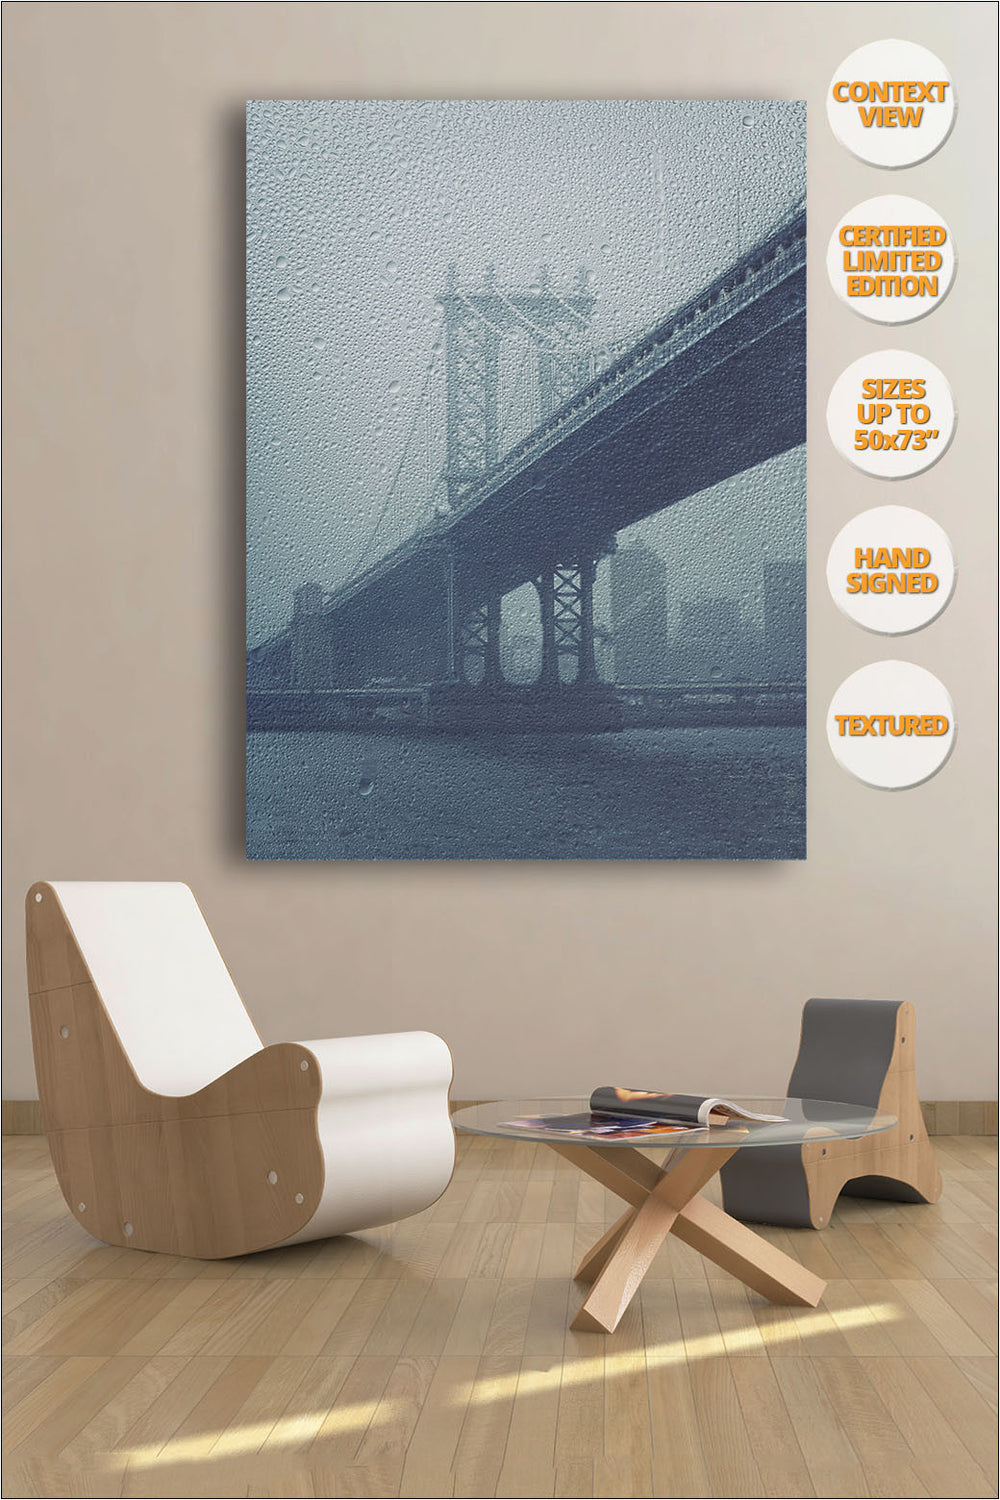 Manhattan Bridge Pillar, New York. | Print hanged in waiting room.